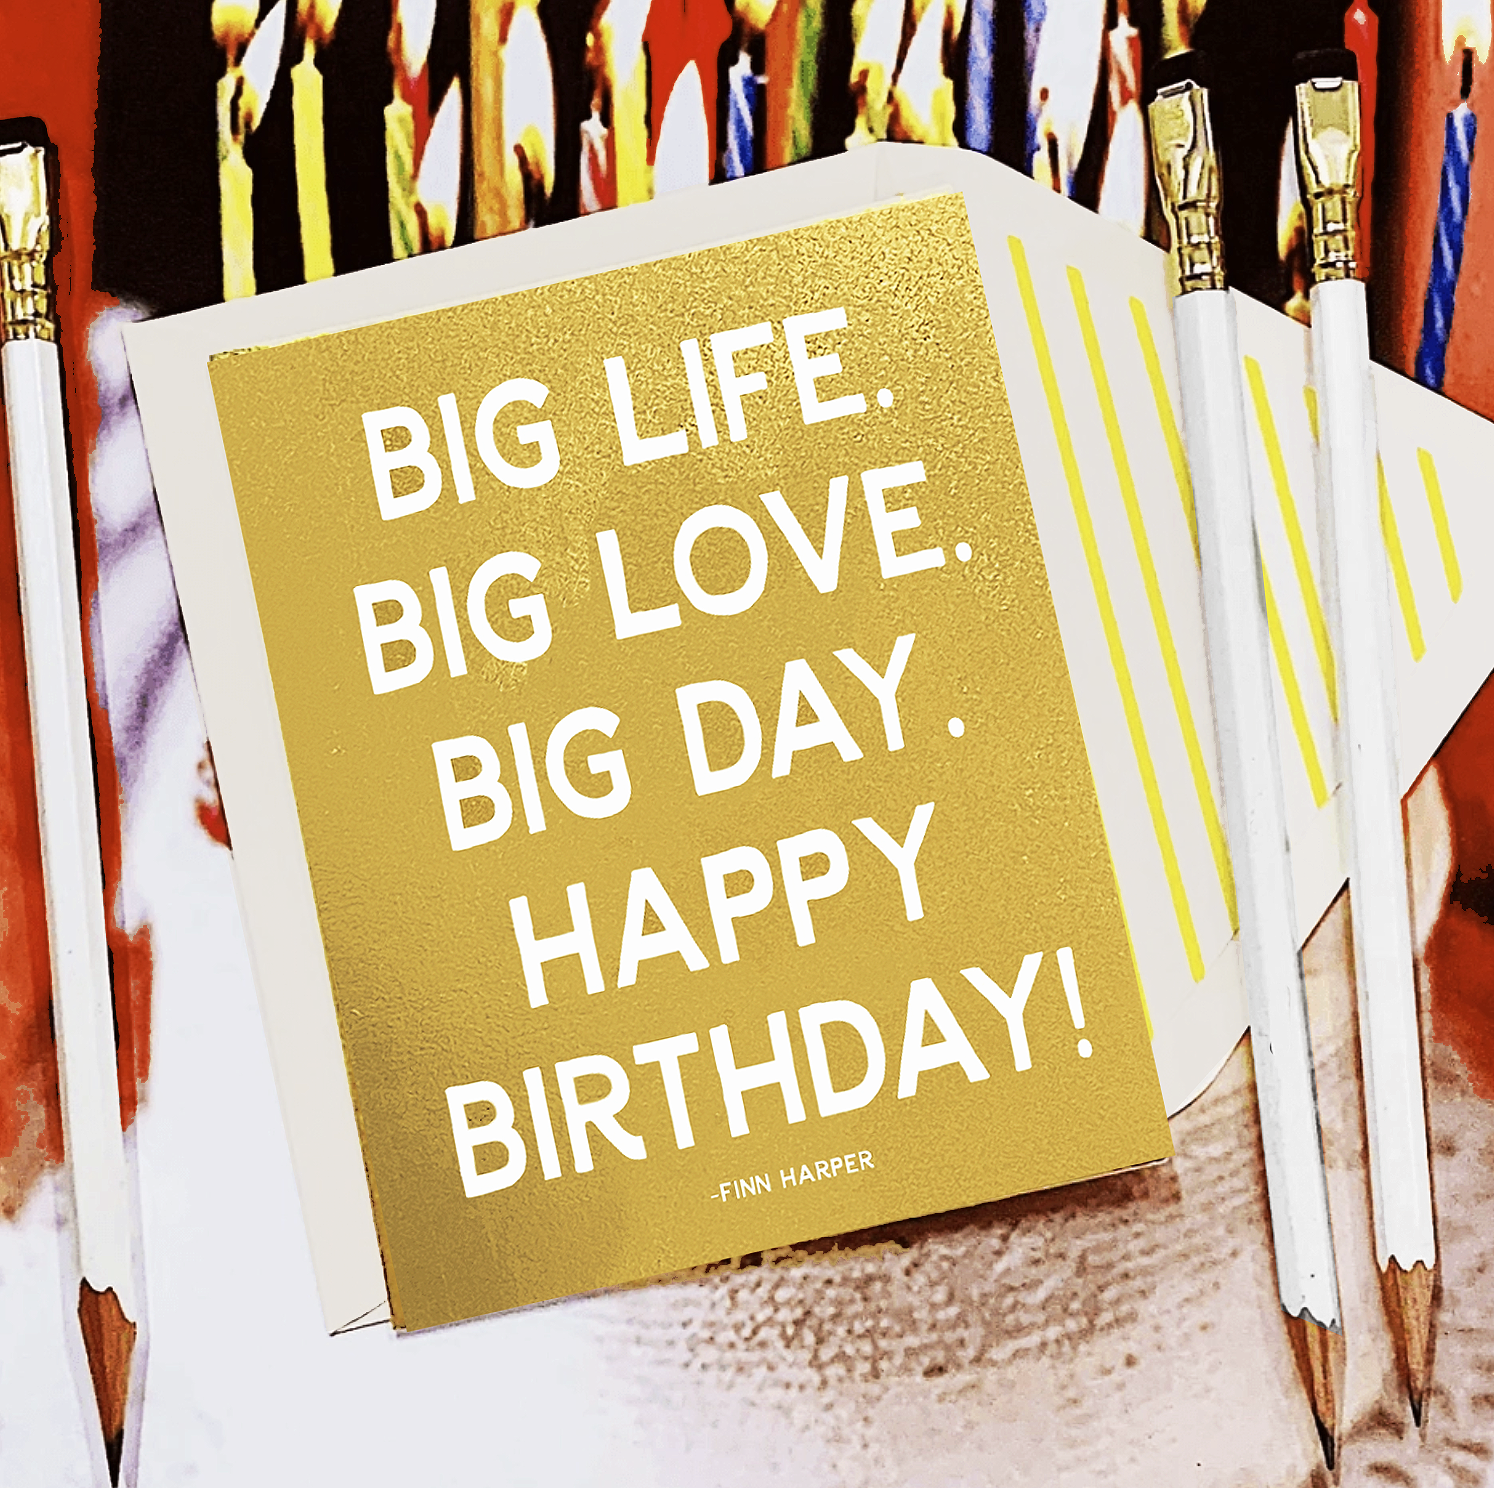 Bensgarden.com | Big Life. Big Love. Big Day. Happy Birthday. Greeting Card, Single Folded Card - Ben's Garden. Made in New York City.